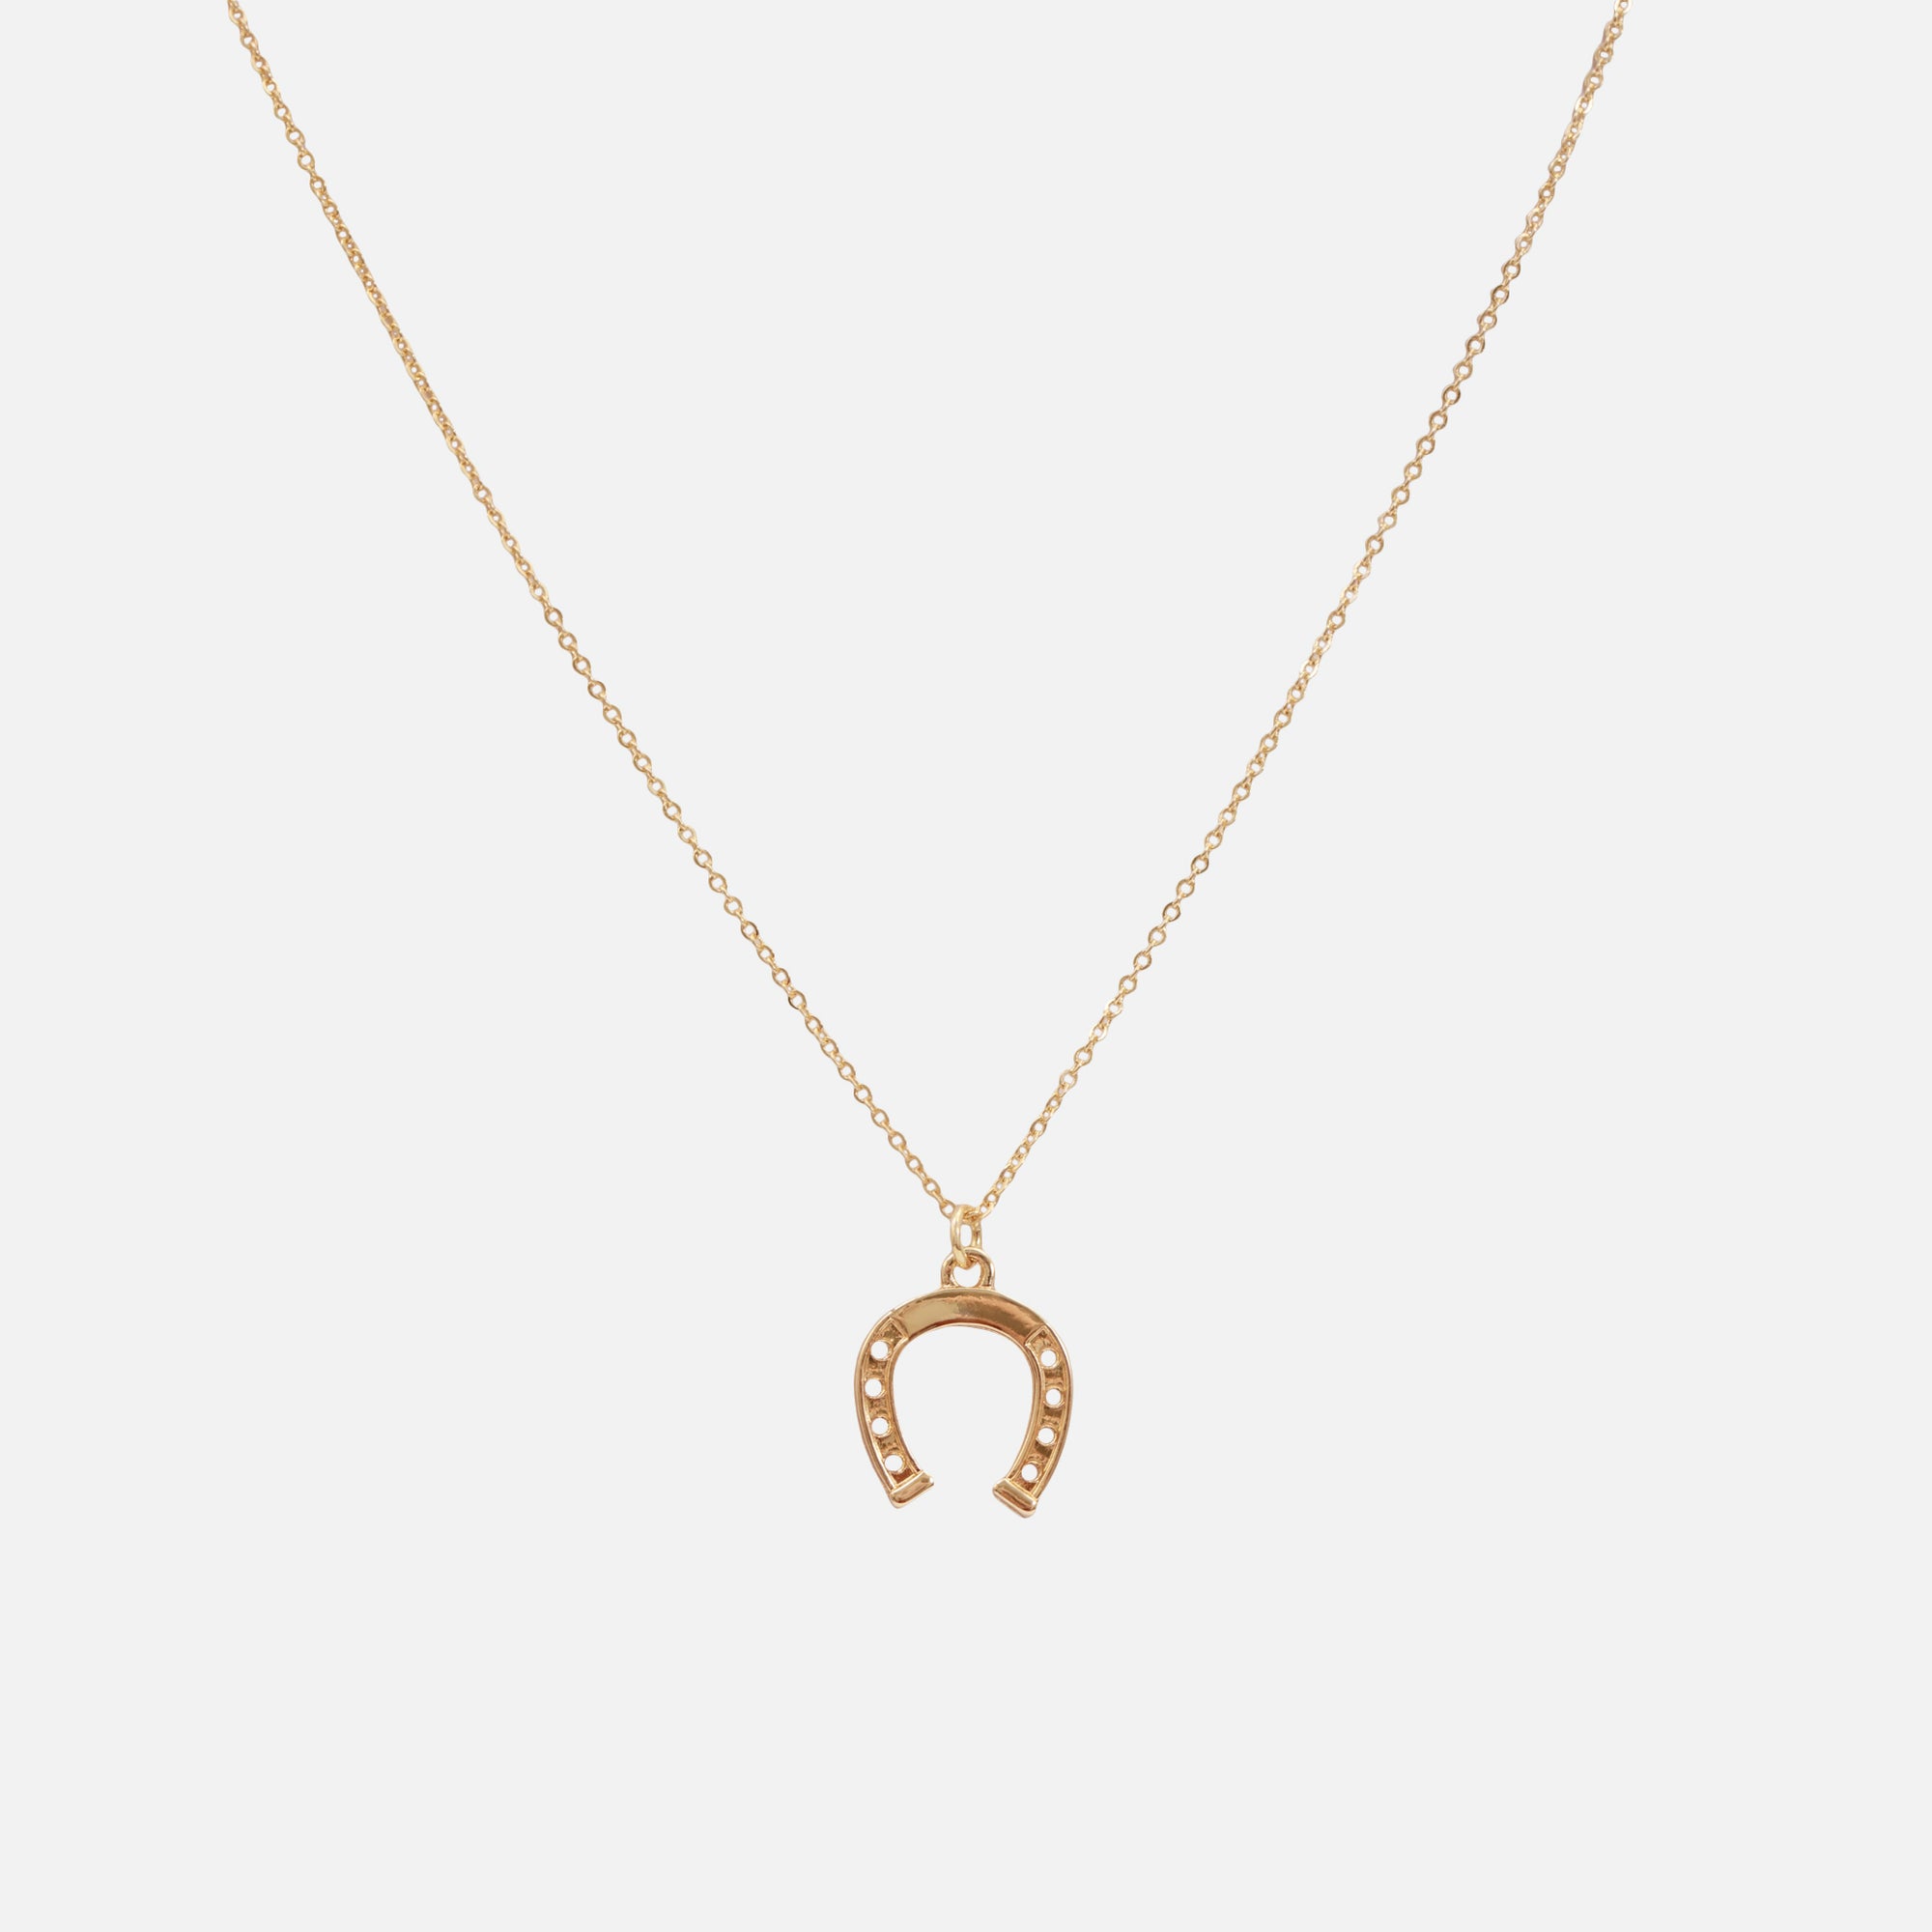 Golden necklace with horseshoe charm 